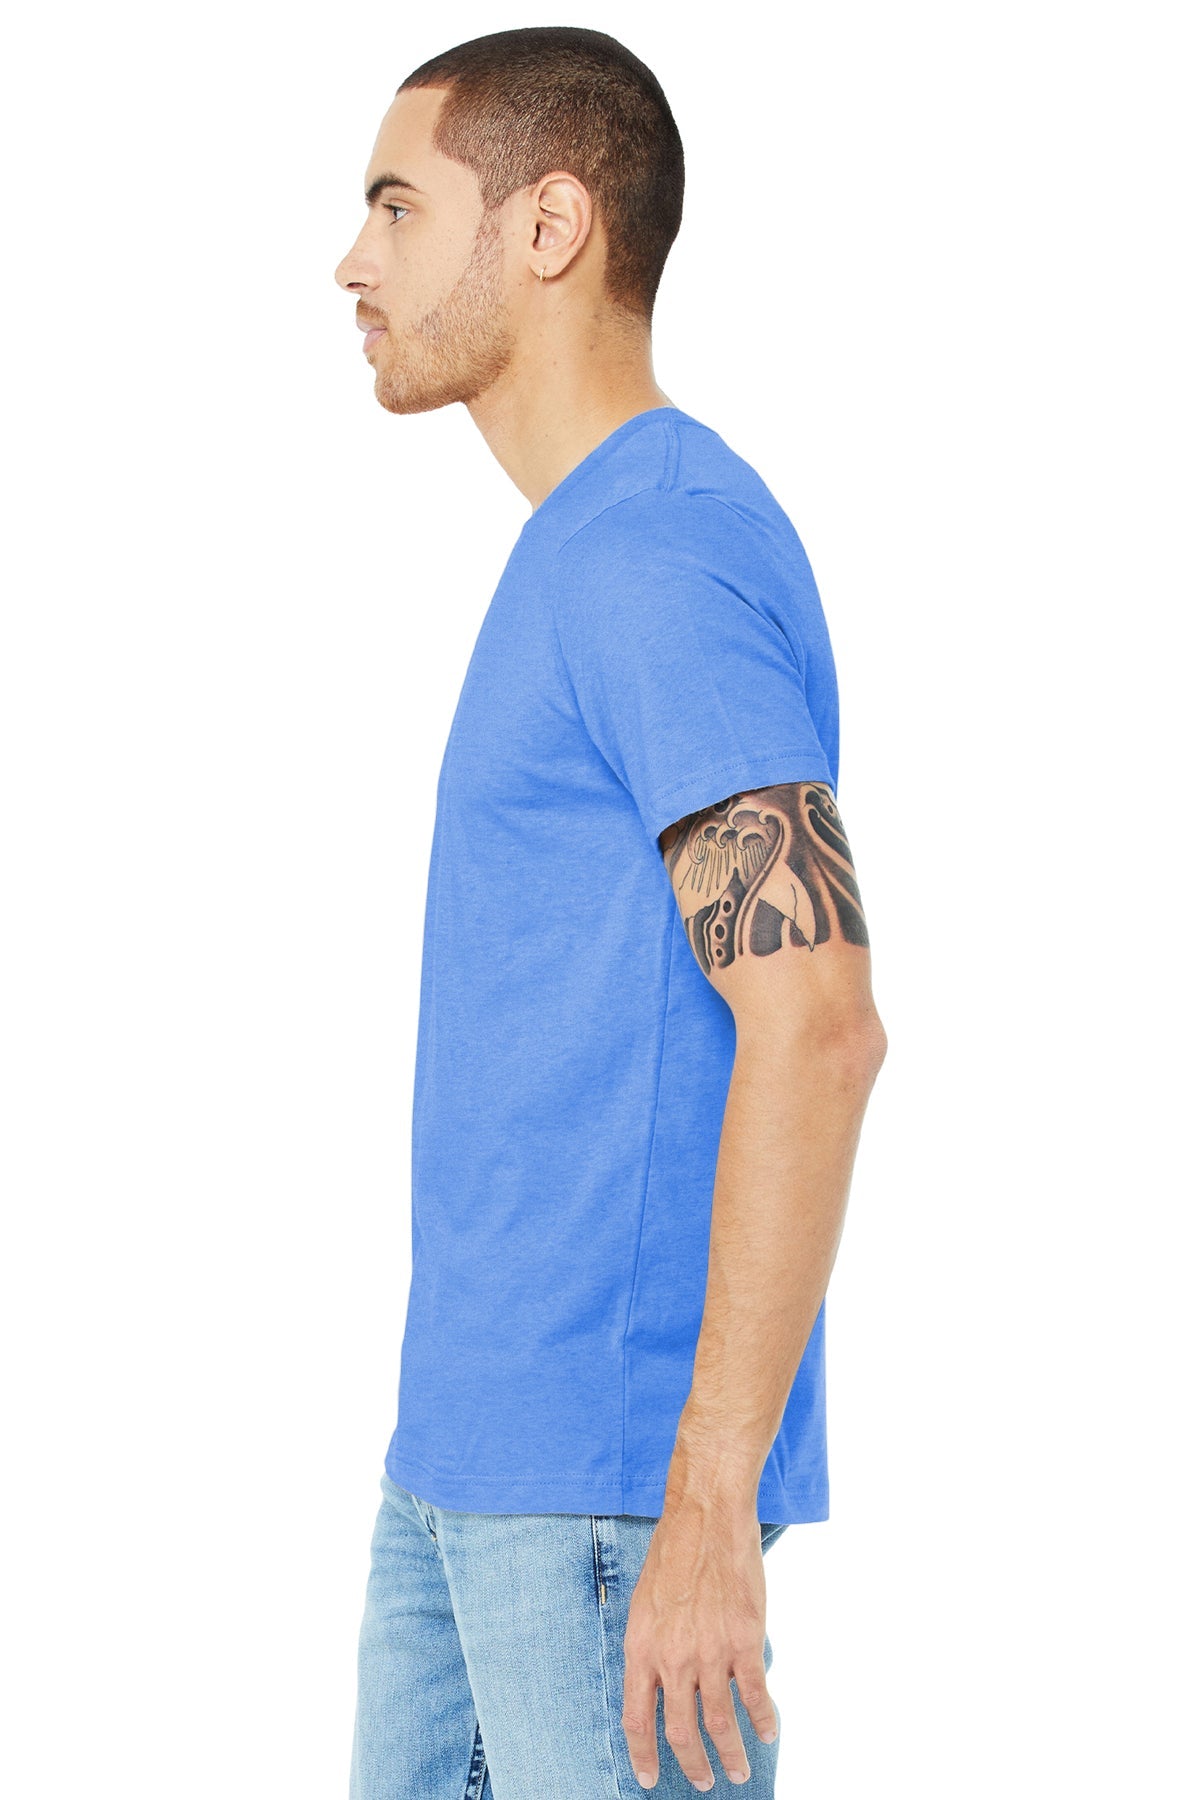 bella + canvas unisex jersey short sleeve t-shirt 3001c hthr colum blue